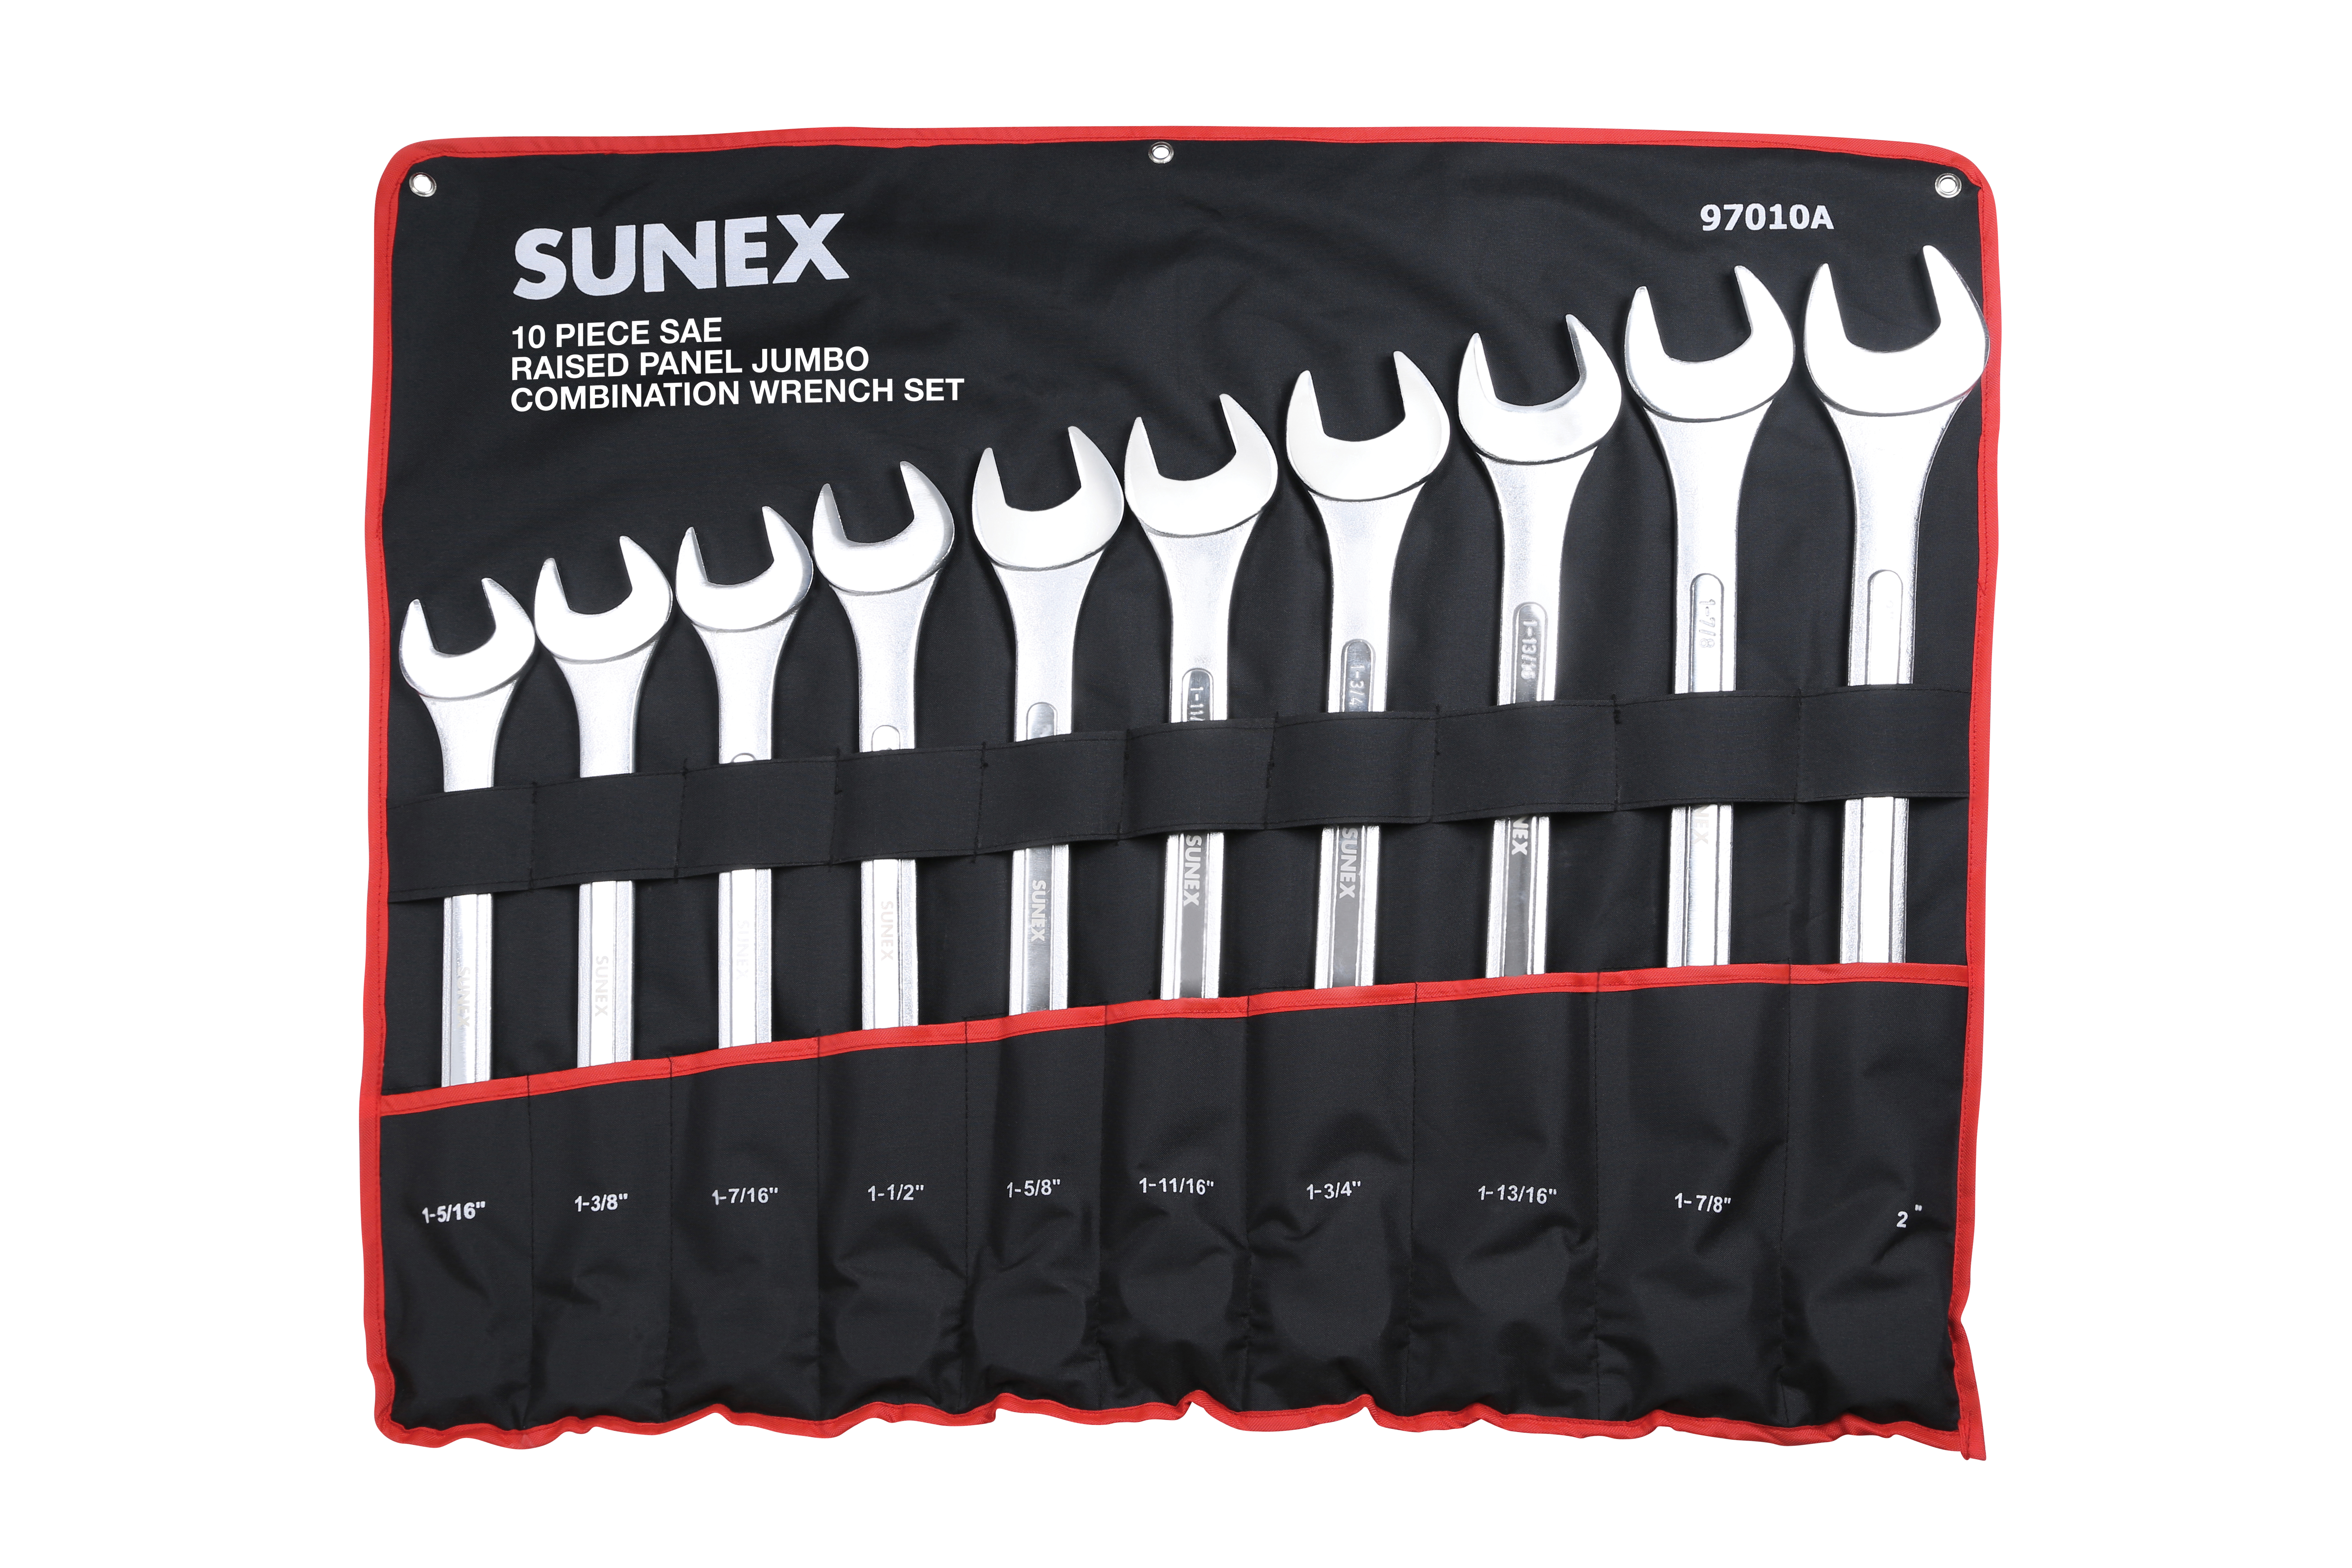 1-5/16" to 2" wrenches SAE Sizes Jumbo Combination Wrench Set Sunex Tools 